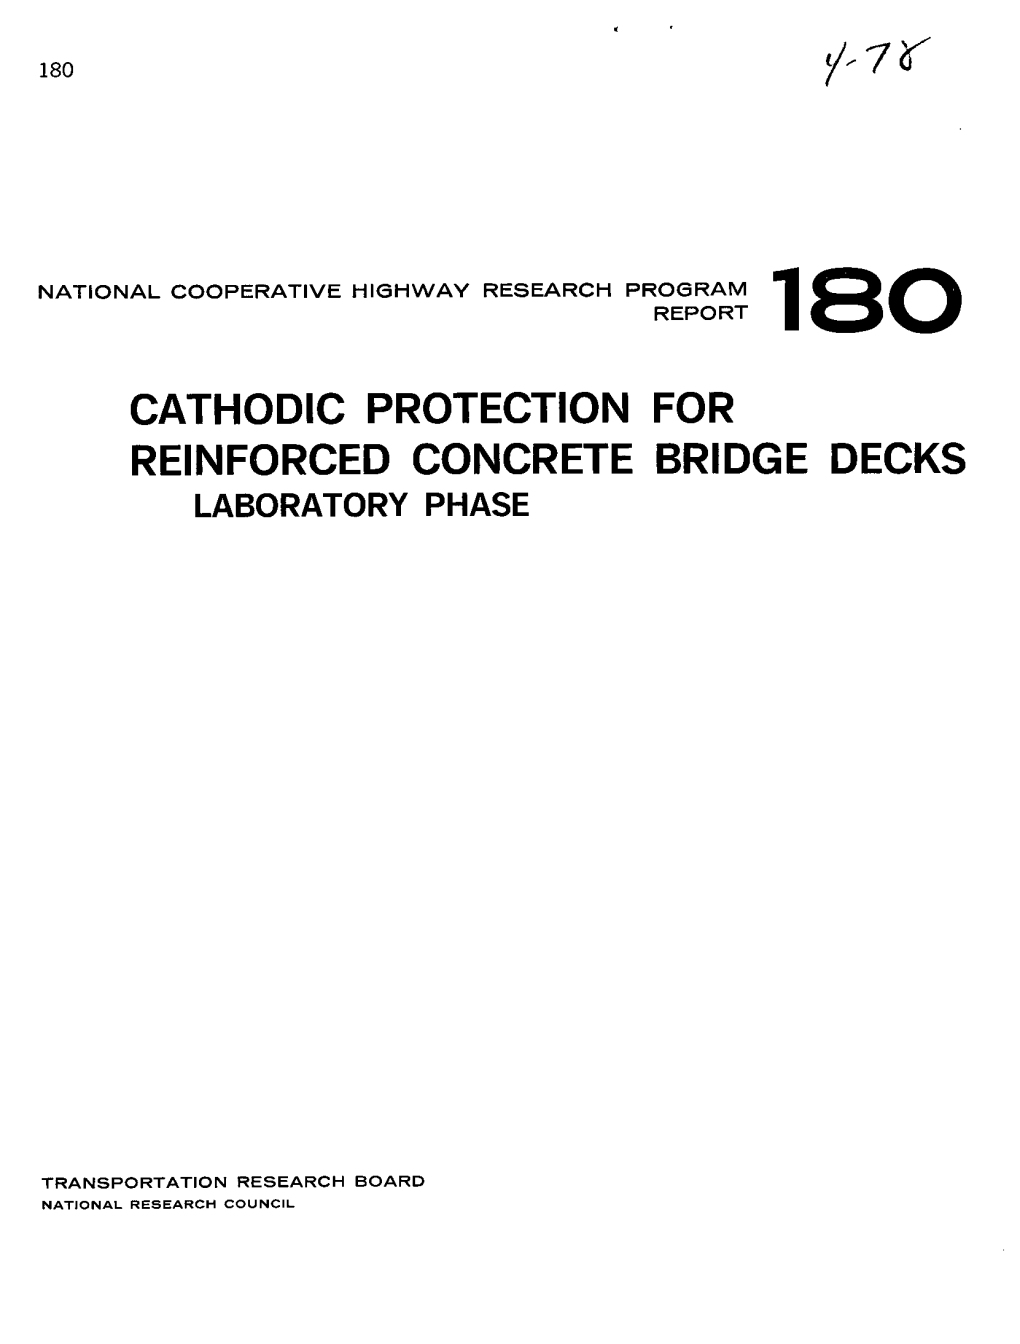 Cathodic Protection for Reinforced Concrete Bridge Decks Laboratory Phase